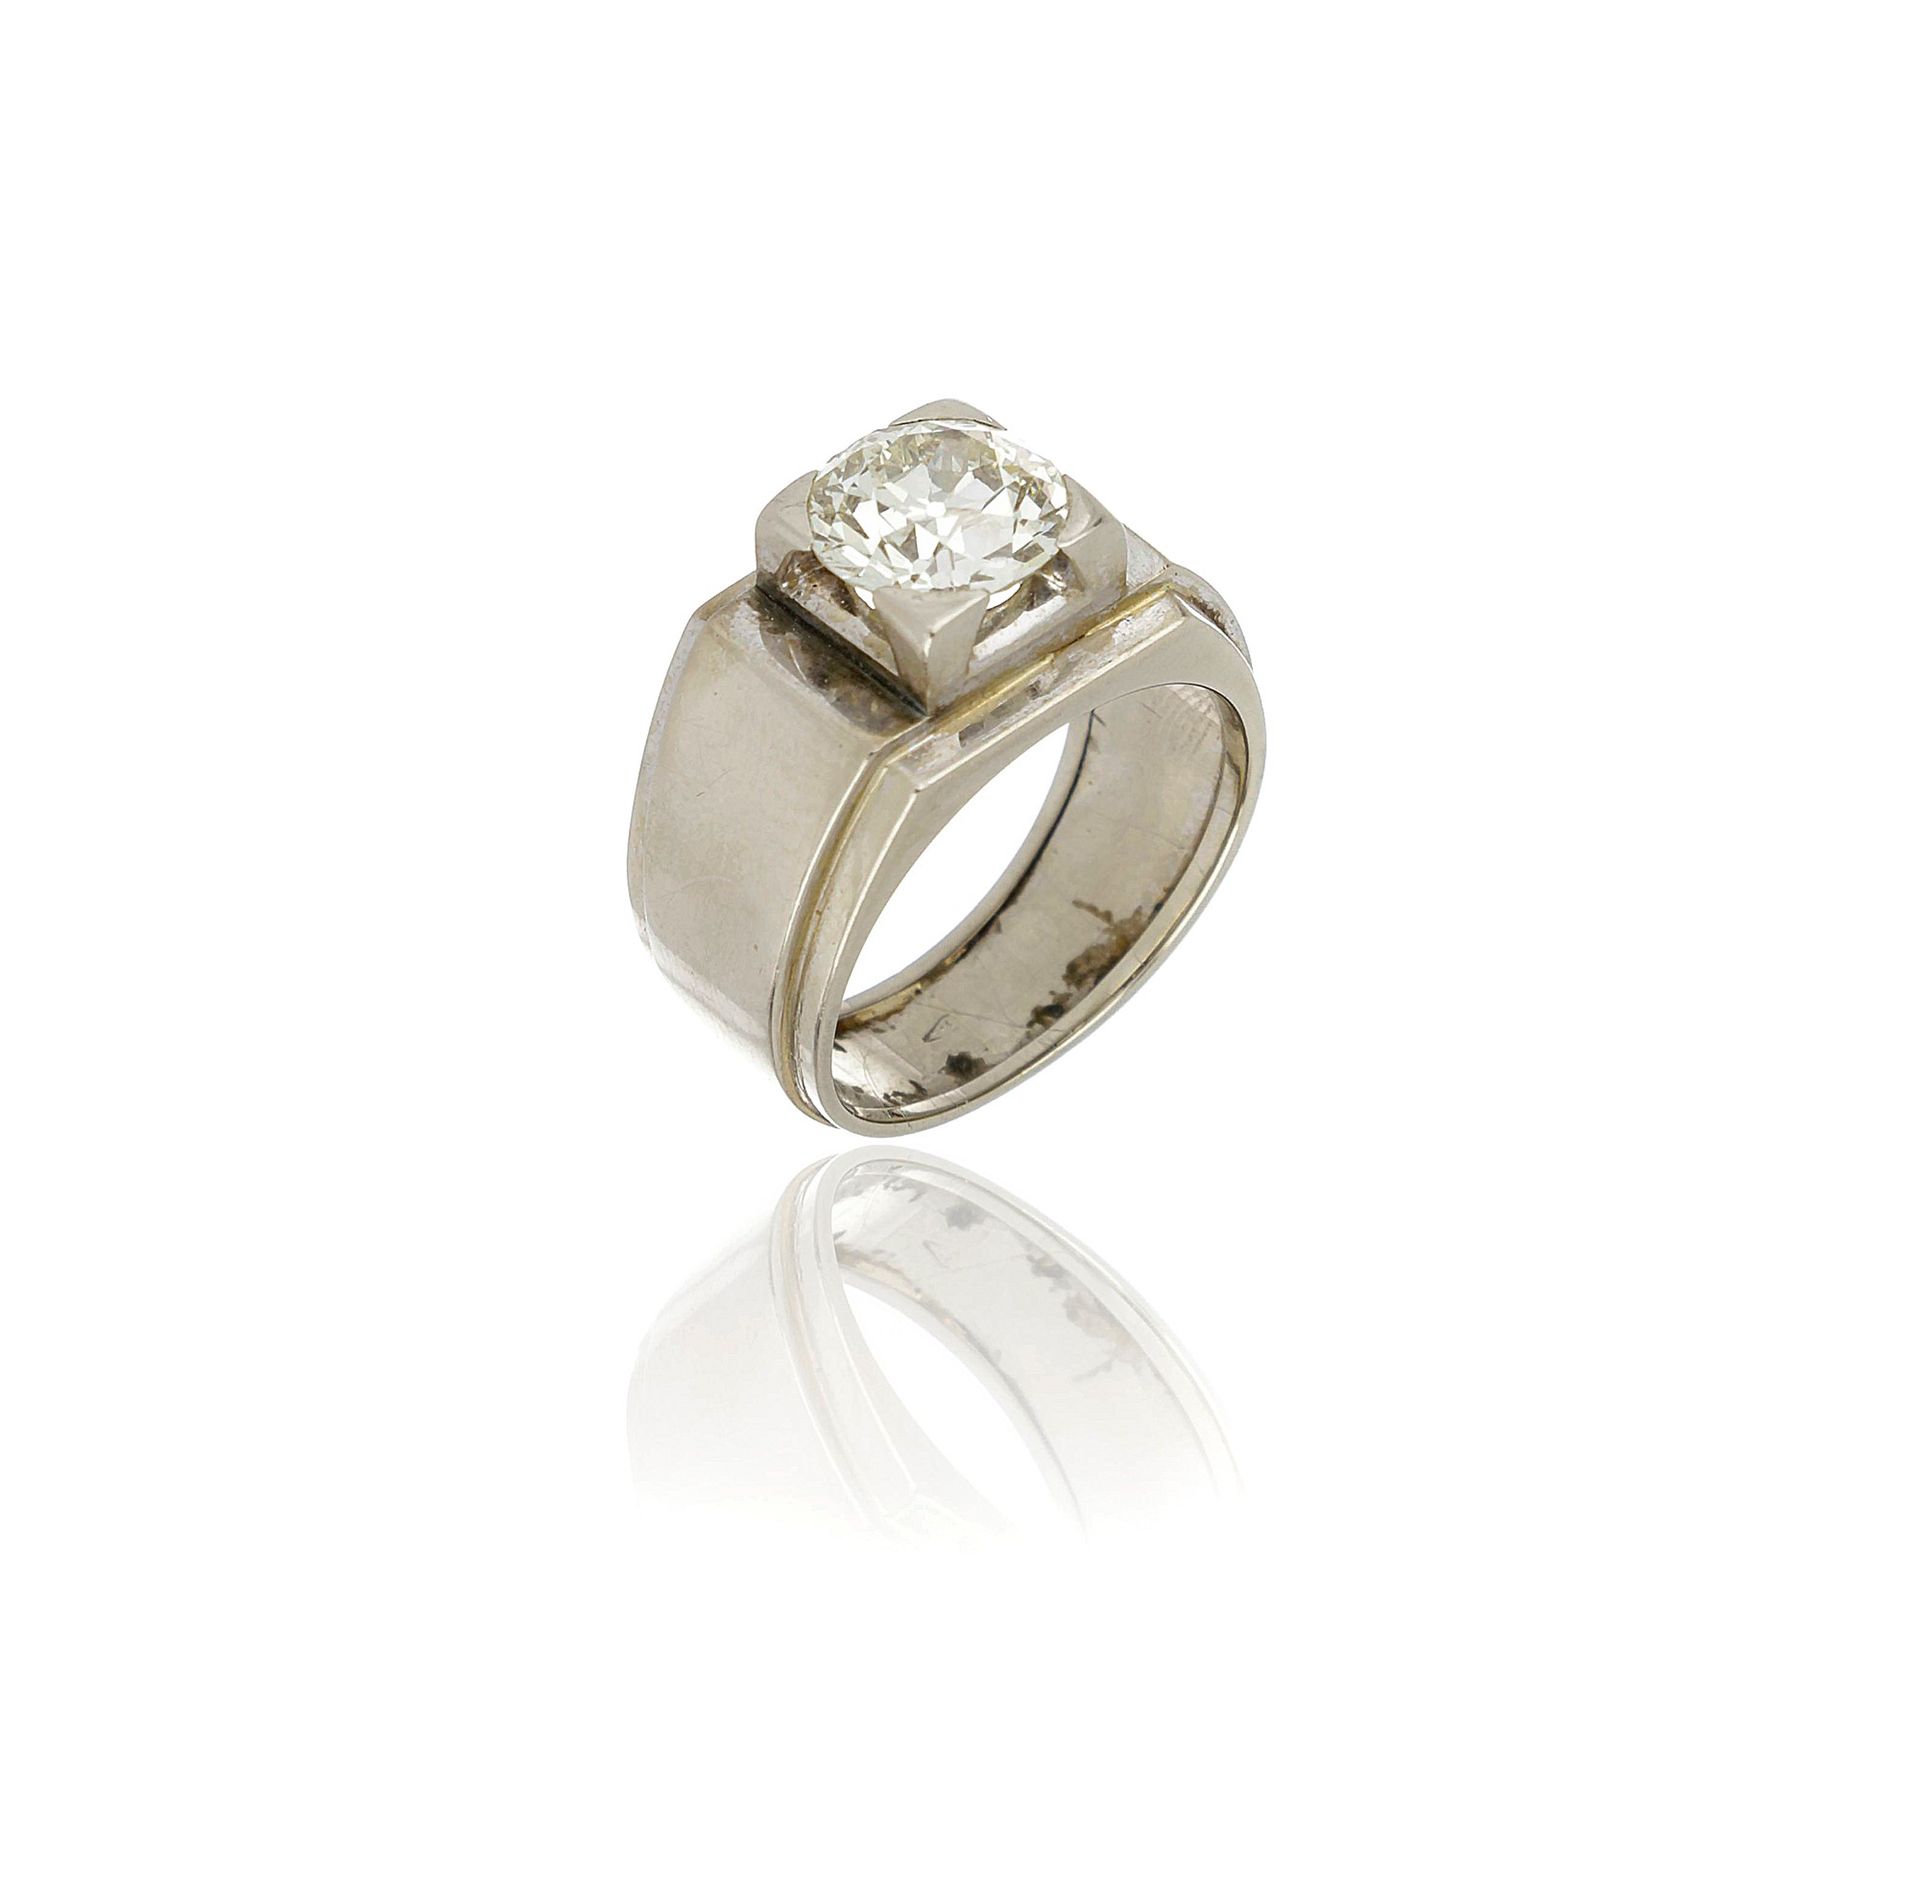 Null 18K白金戒指，镶有约2.80克拉的圆形明亮式切割钻石。 

尺寸18/58

重量15.47克18K白金戒指，镶有约2.80克拉的圆形明亮式切割钻石&hellip;